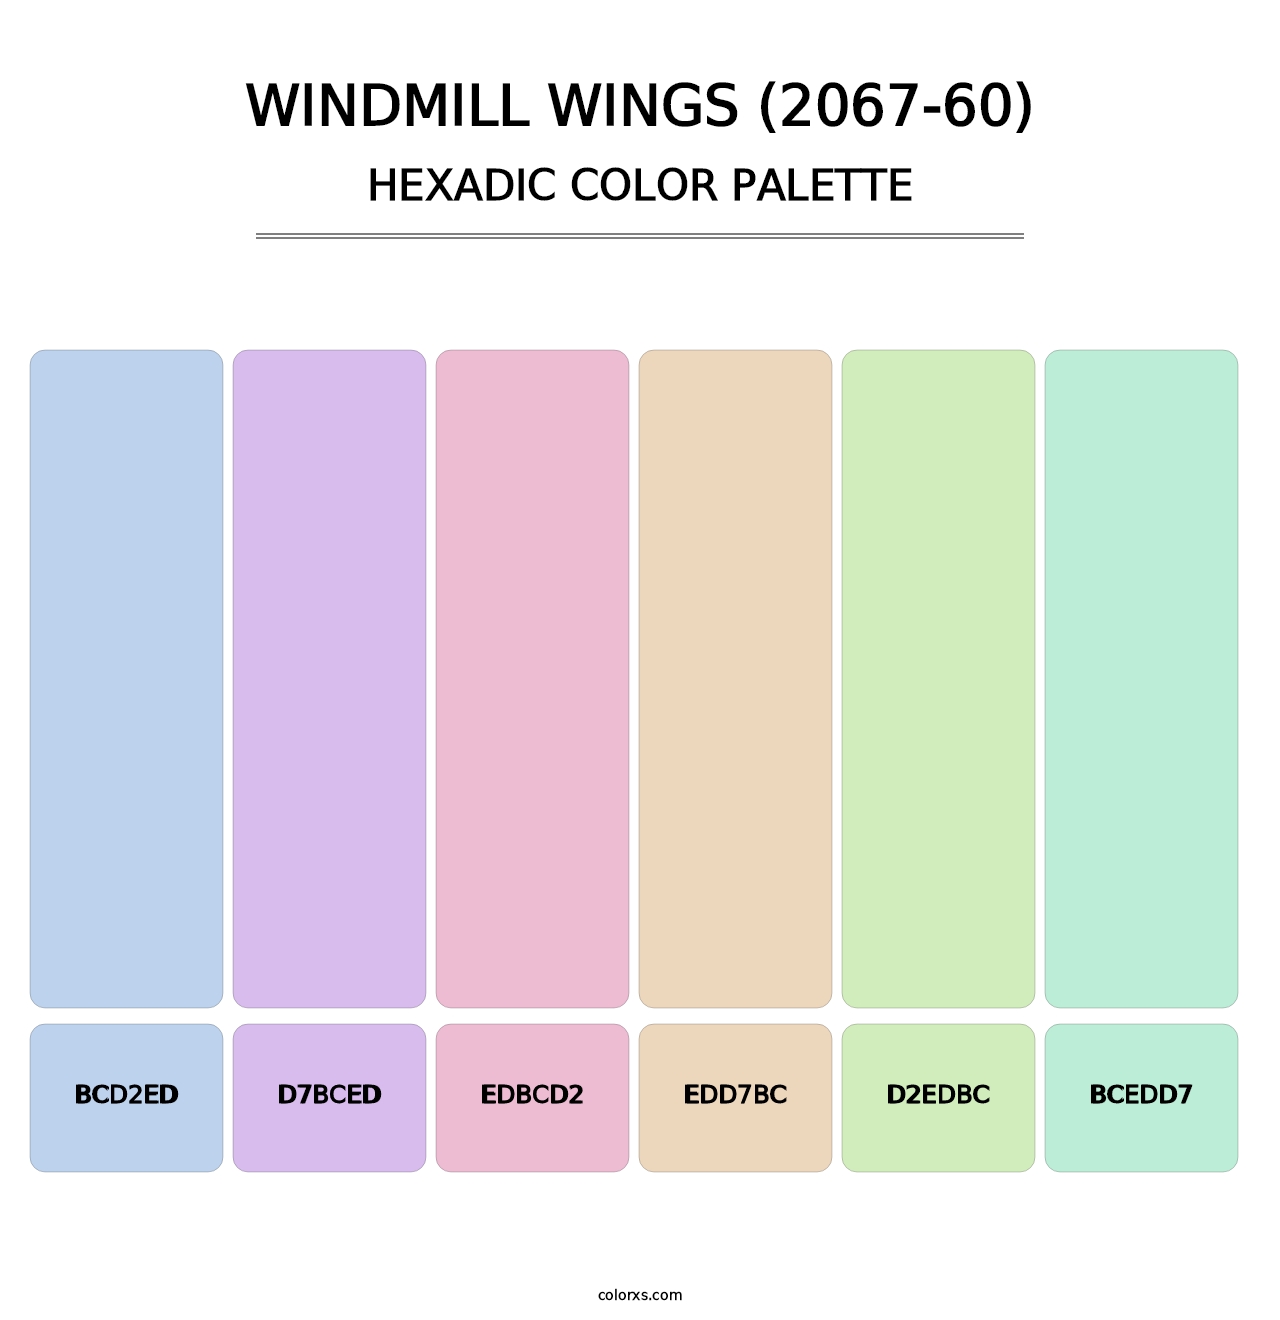 Windmill Wings (2067-60) - Hexadic Color Palette